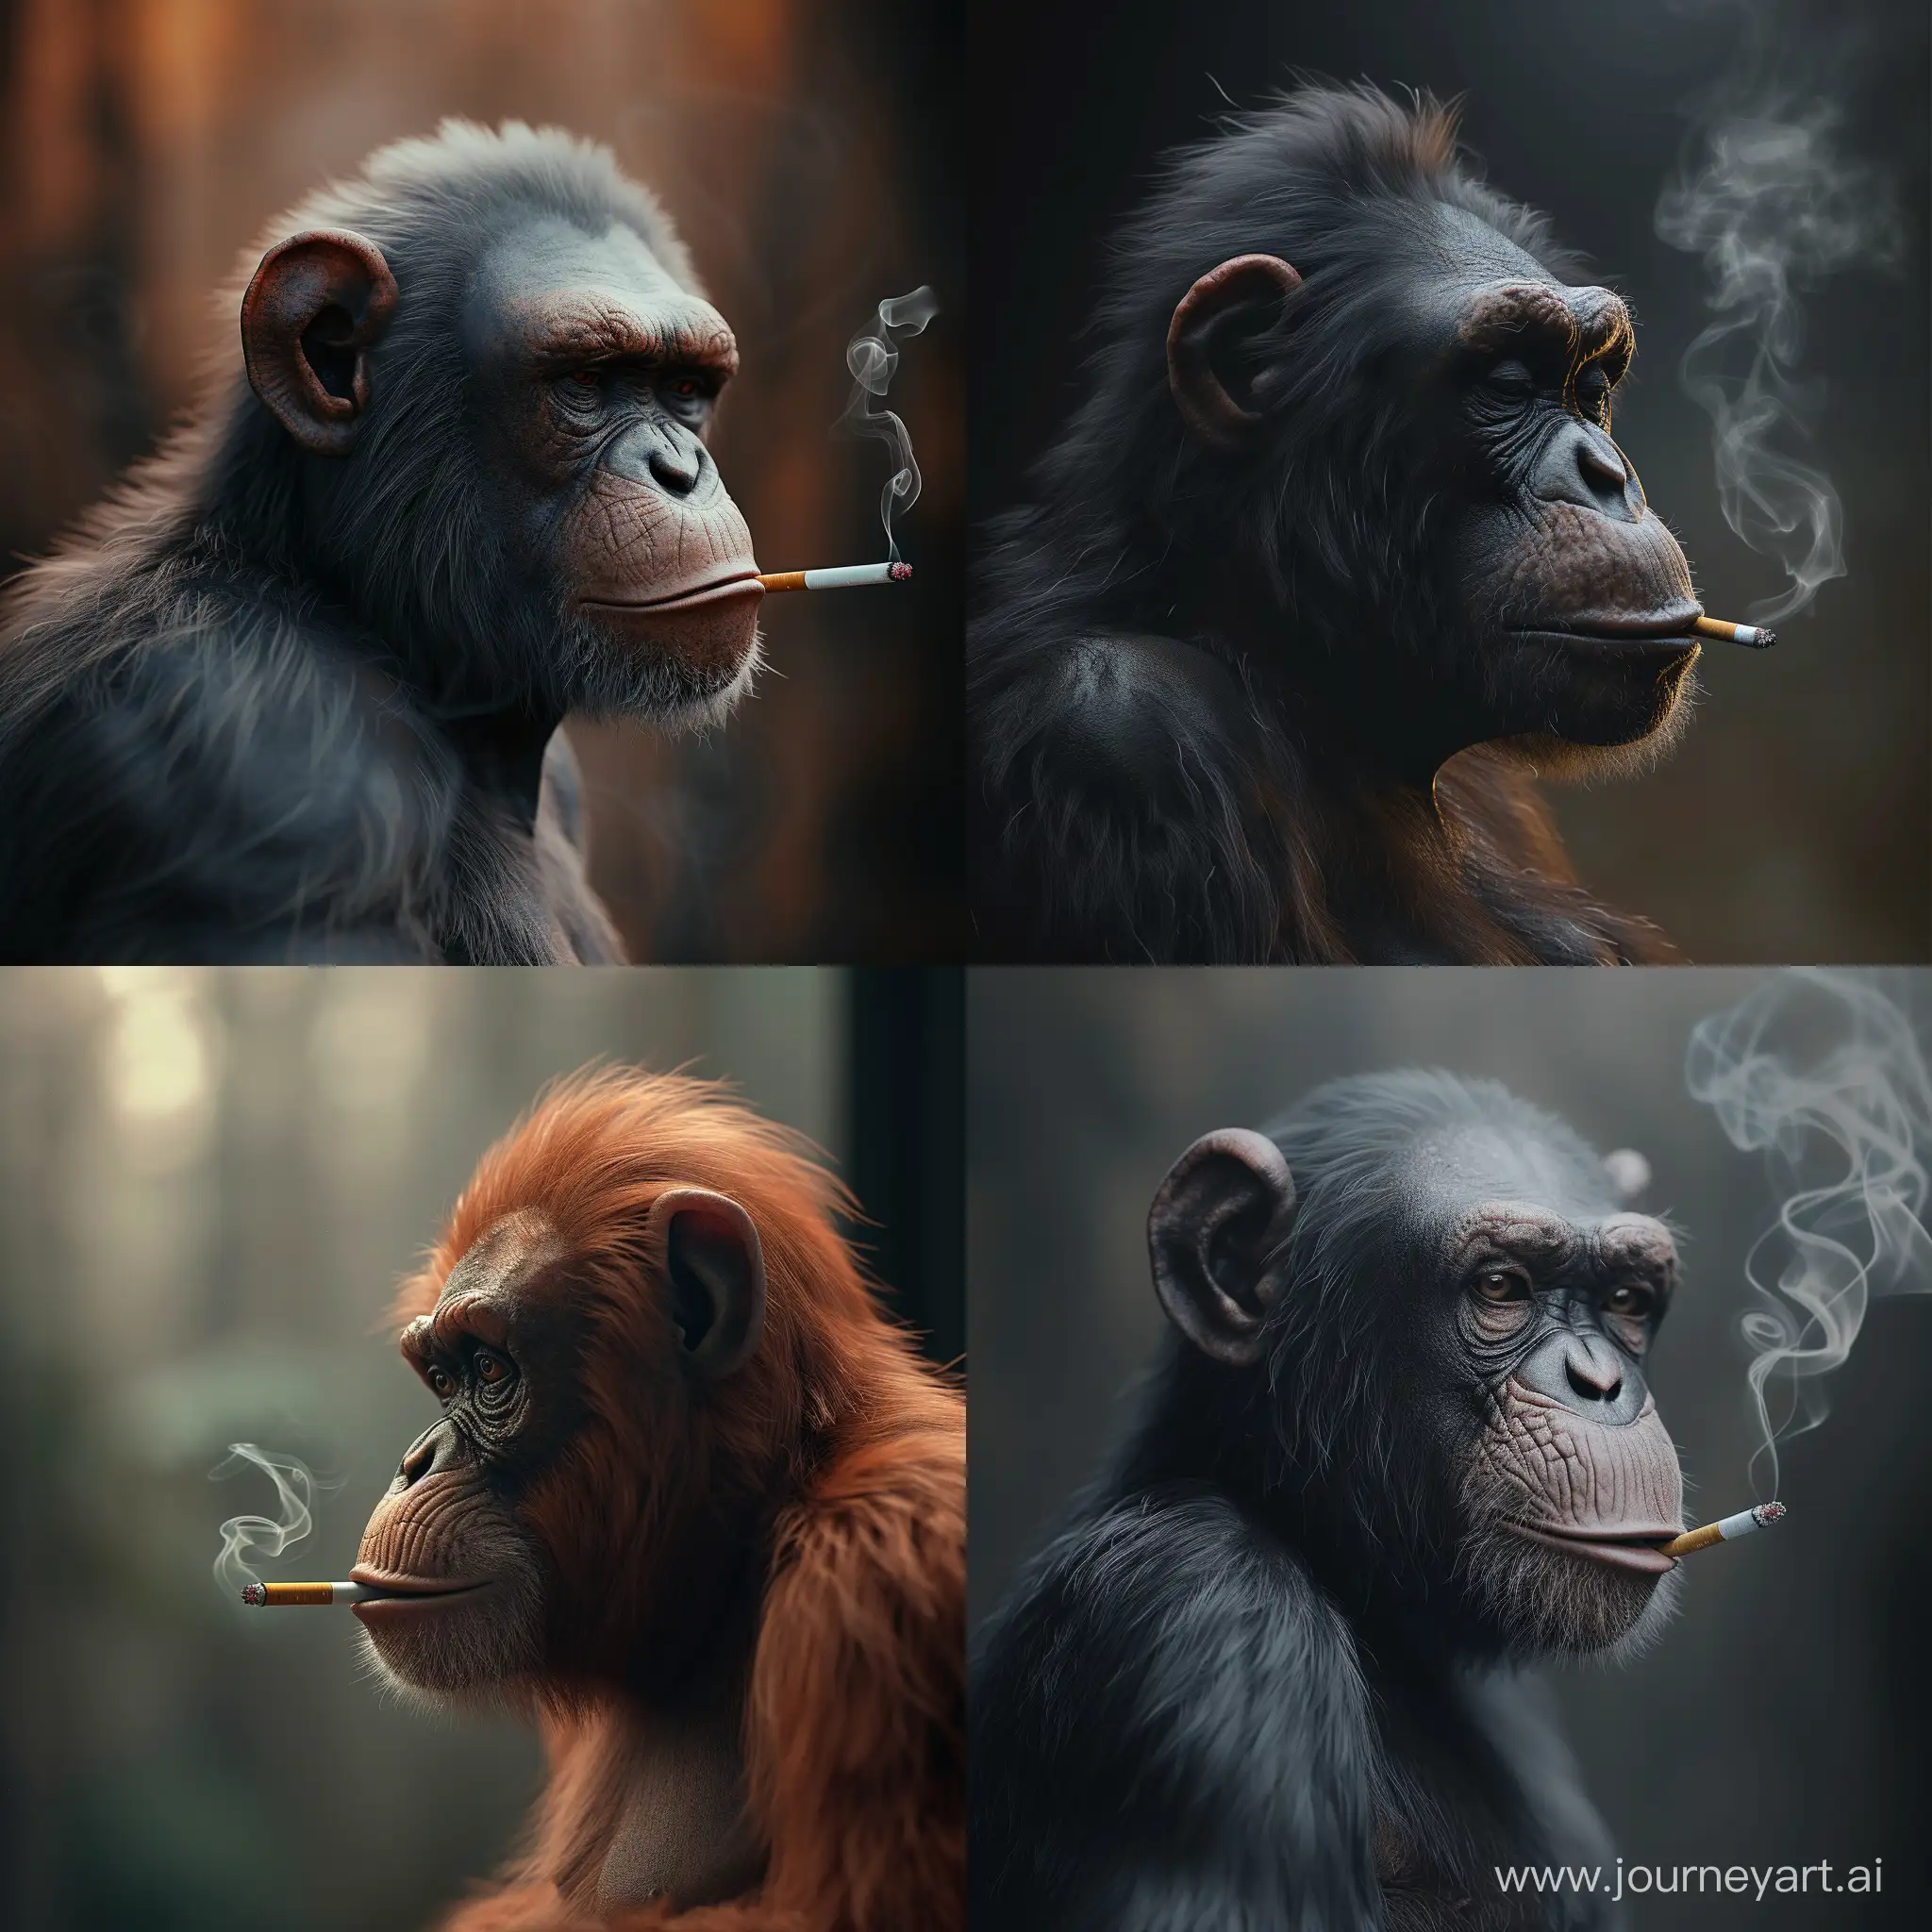 8k, realistic, monkey, side look, funny, smoking cigarette